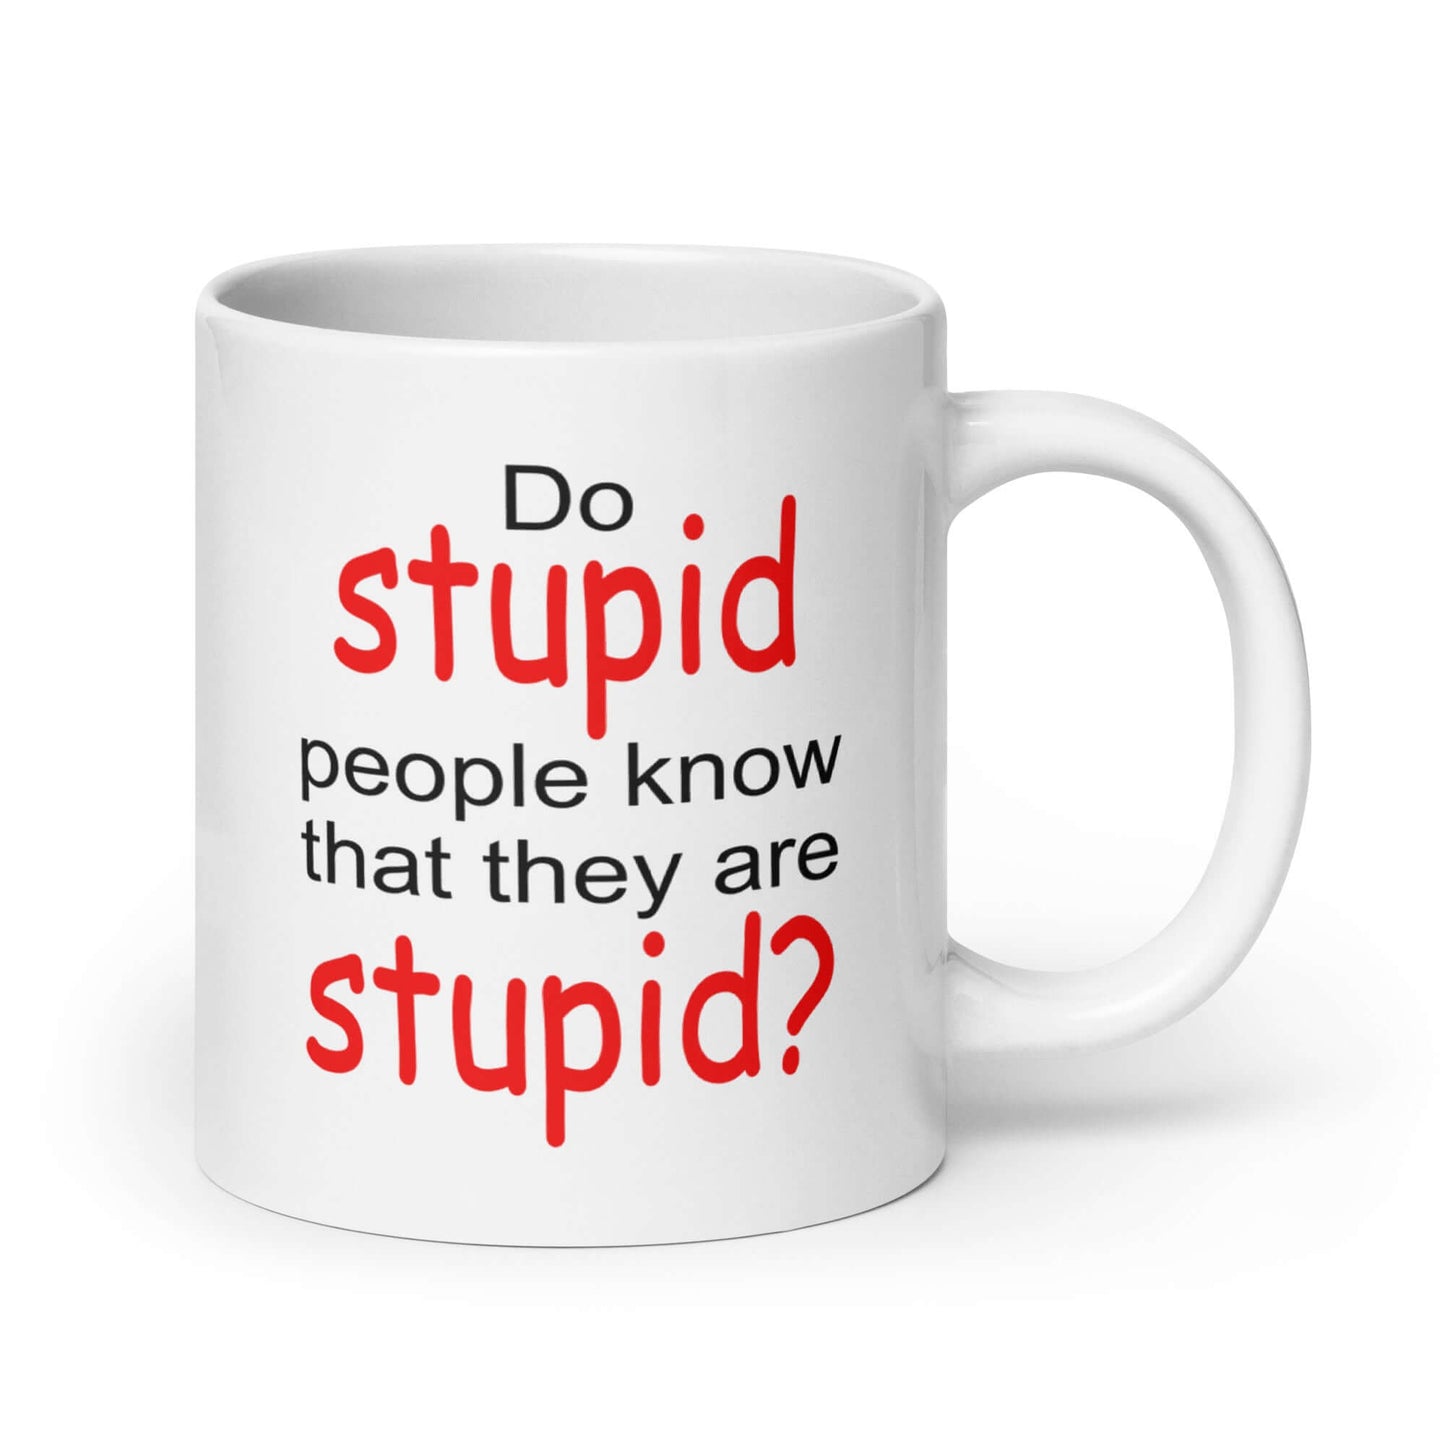 Do stupid people know they are stupid sarcastic coffee mug